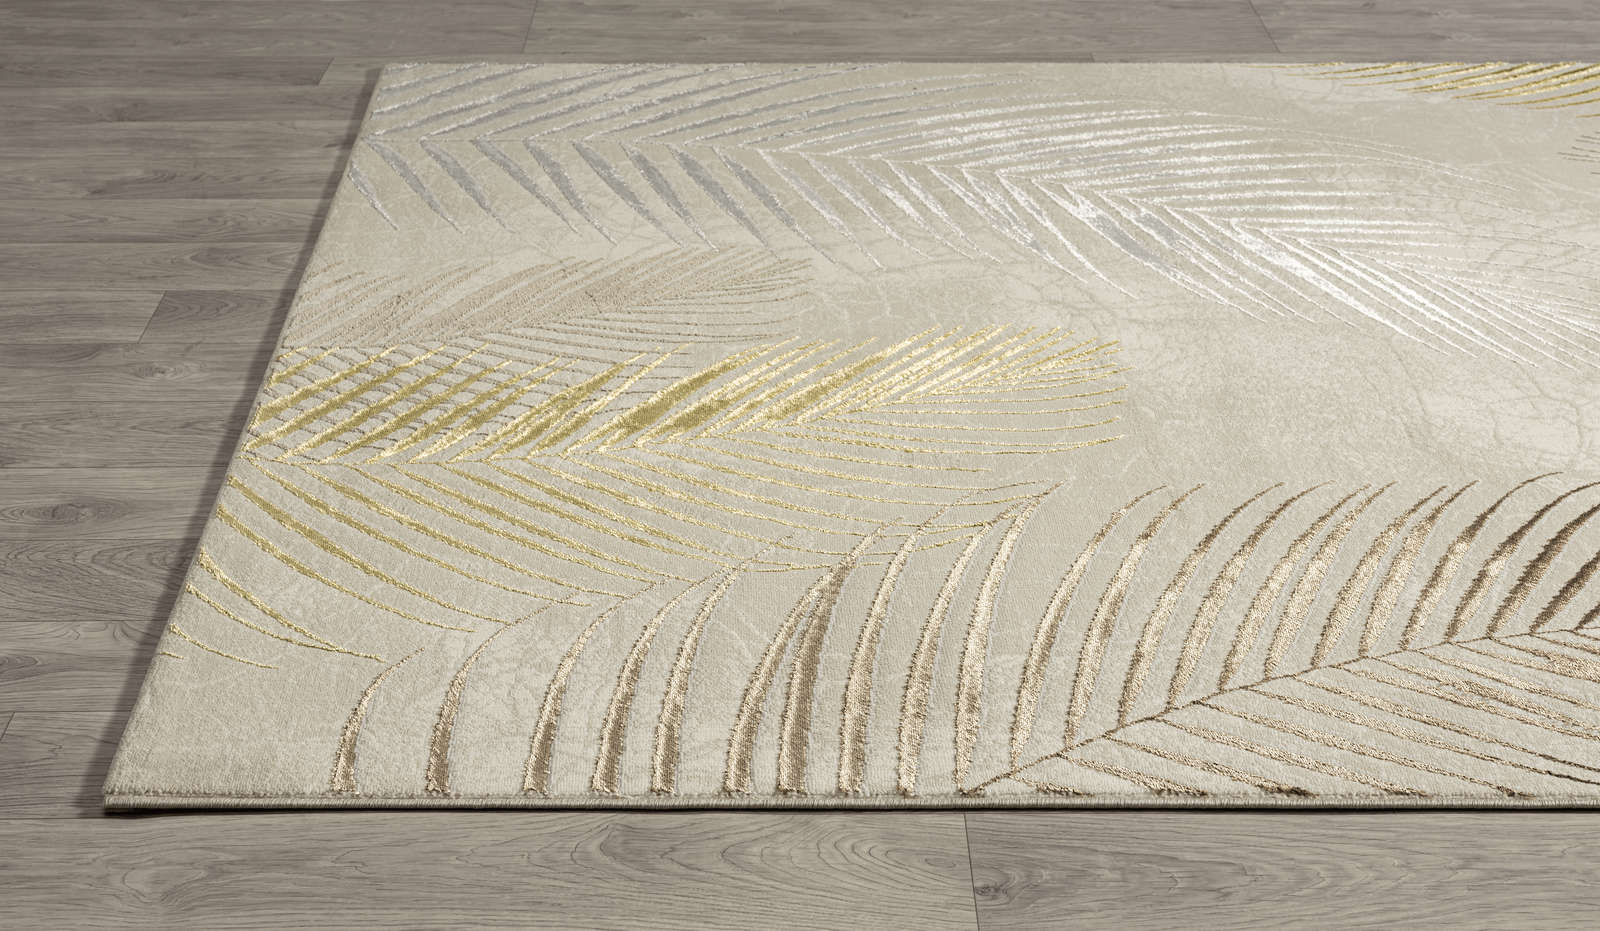             soft cream high pile carpet - 290 x 200 cm
        